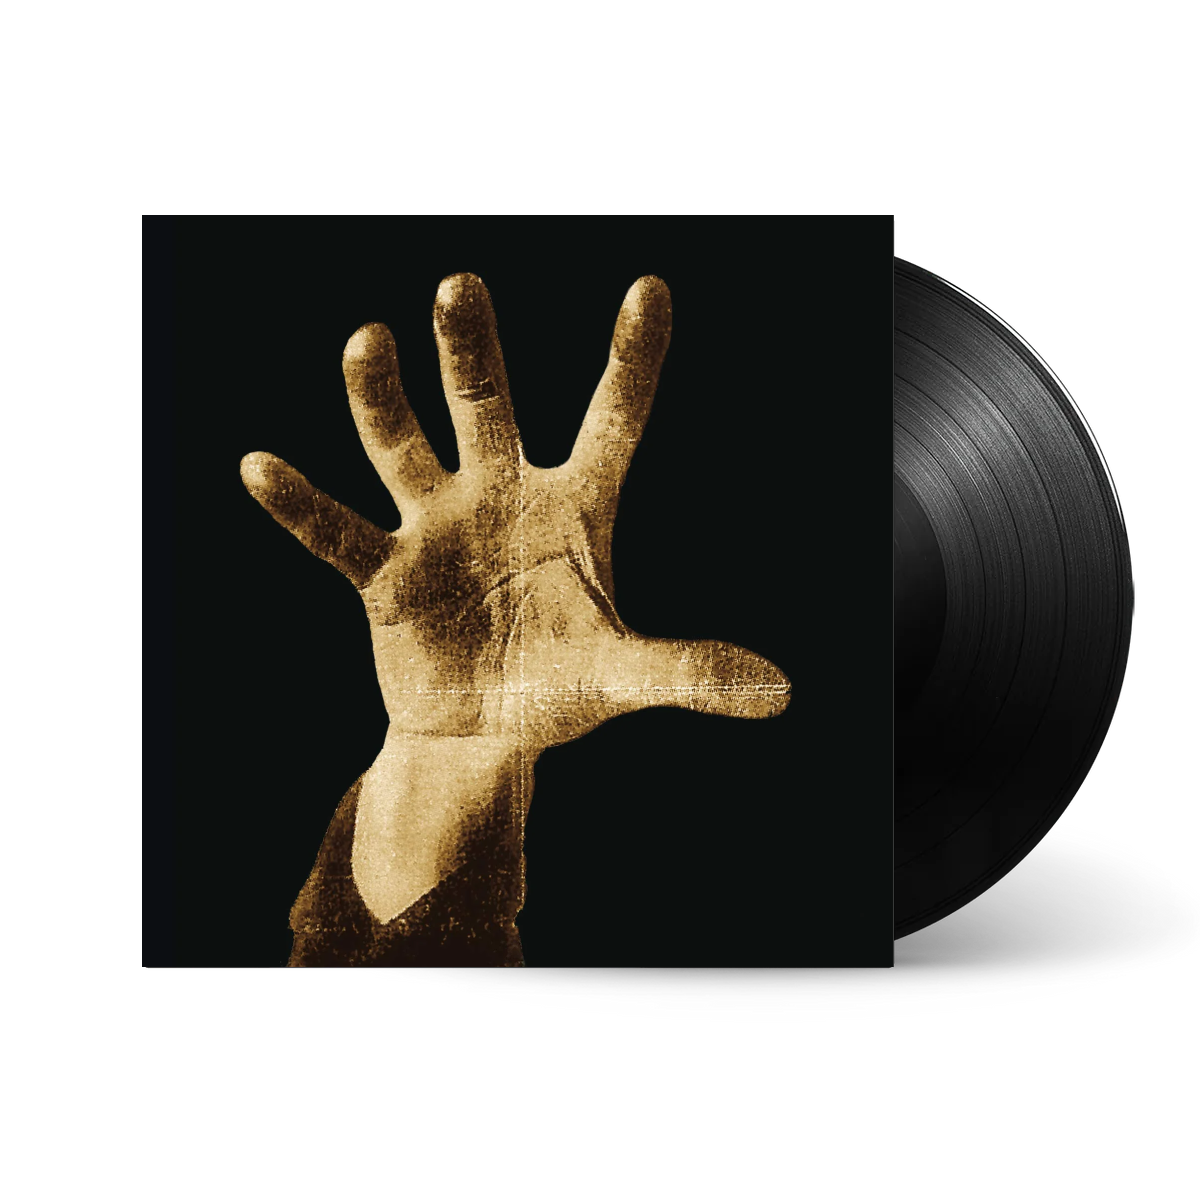 System Of A Down Four Album & Signed Book & Vinyl Bundle